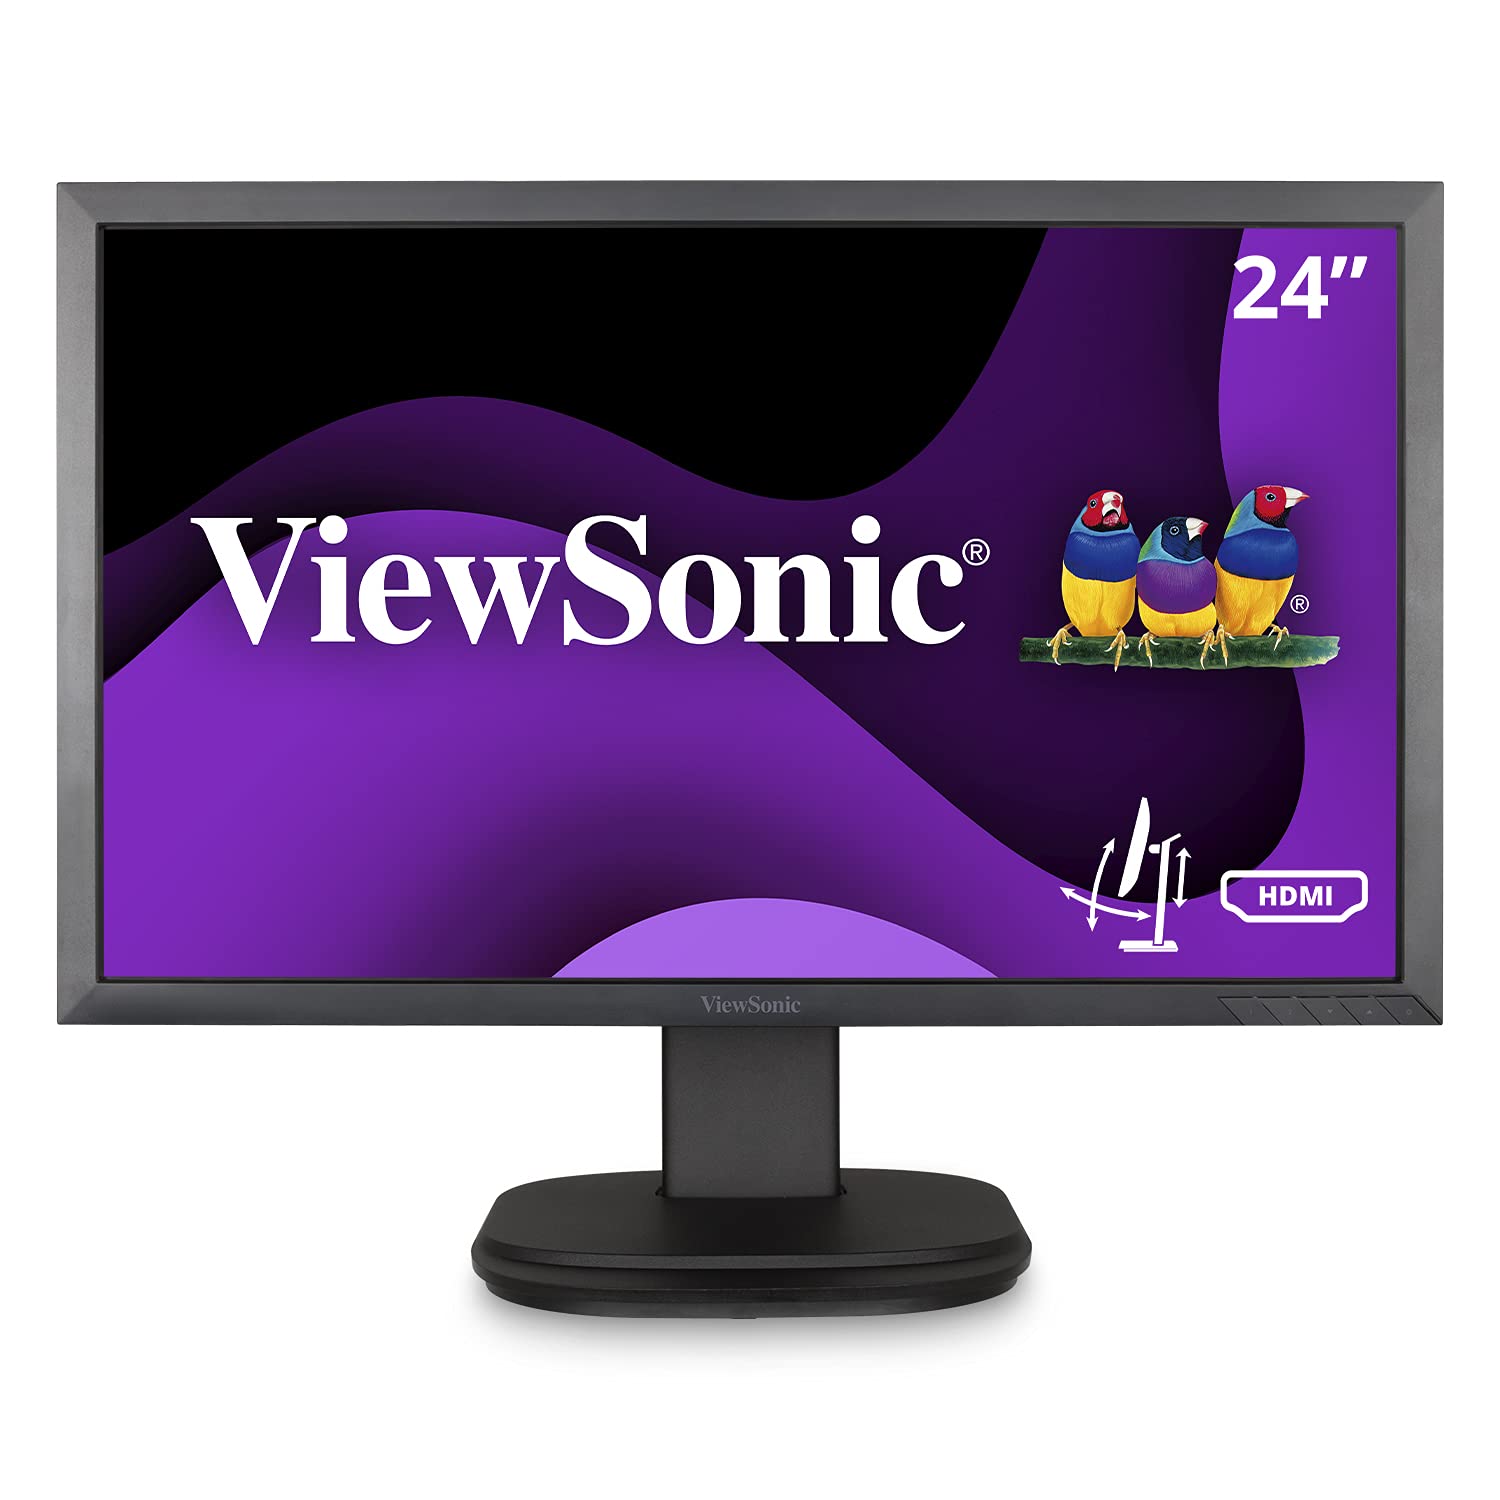 Viewsonic VG2439SMH 24 インチ 1080p 人間工学に基づいたモニター、HDMI Dis...